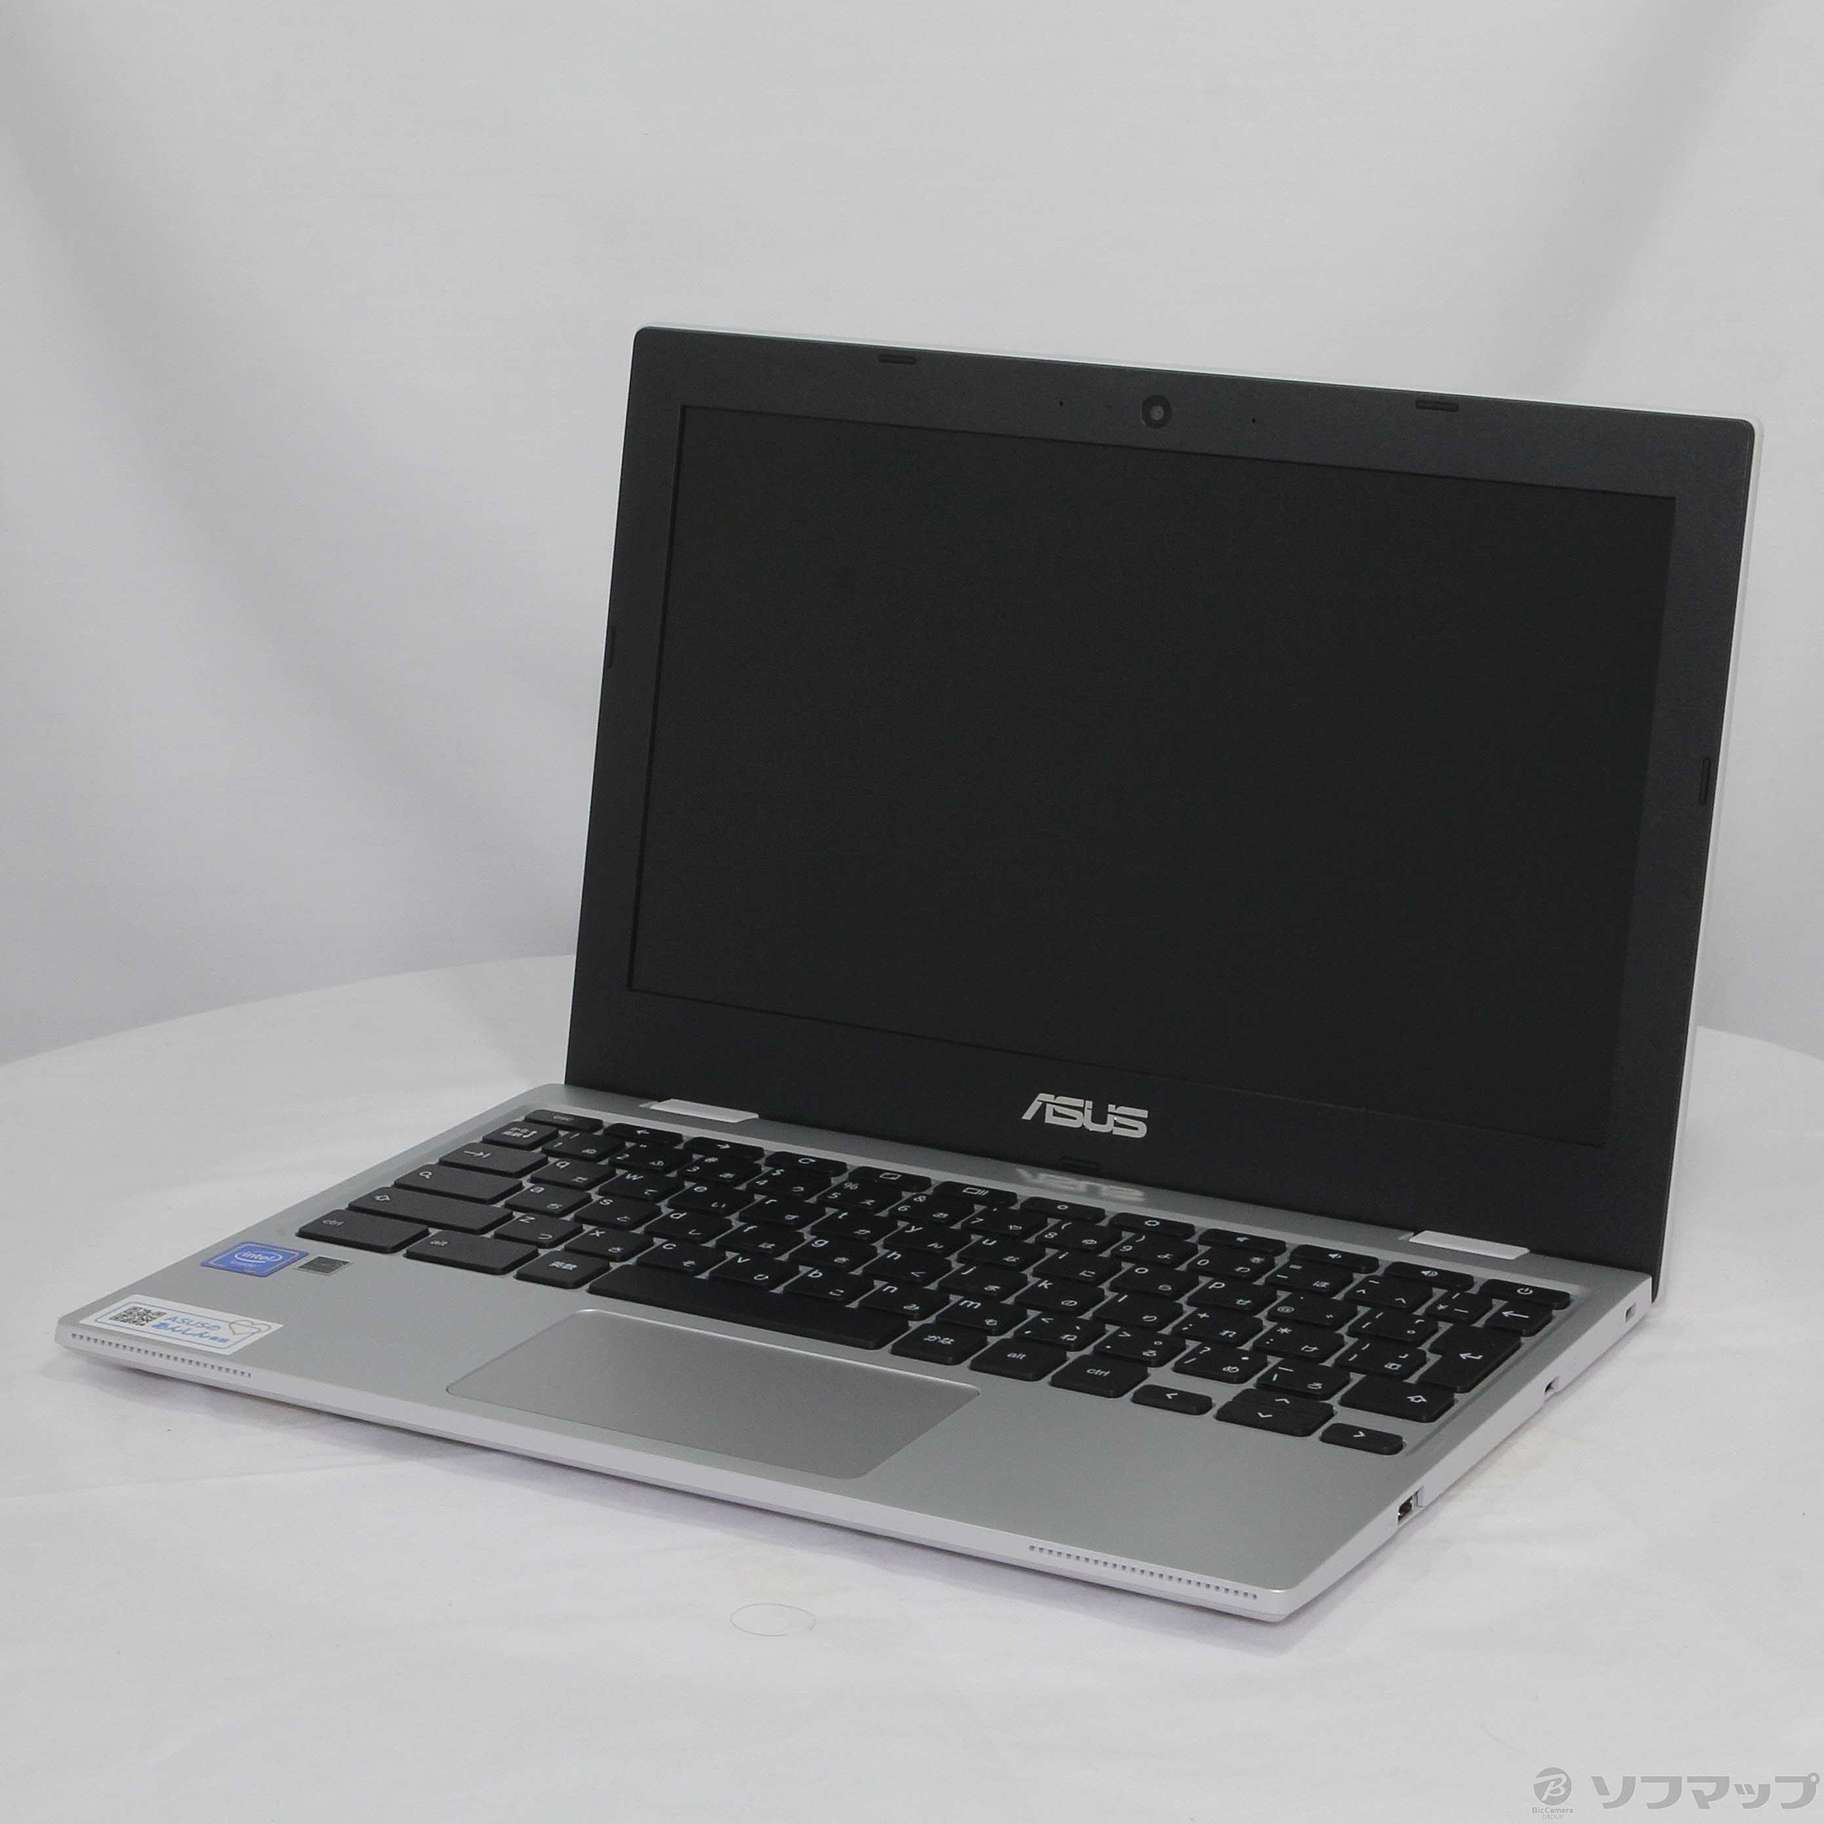 ASUS ChromeBook CX1101CMA-GJ0019